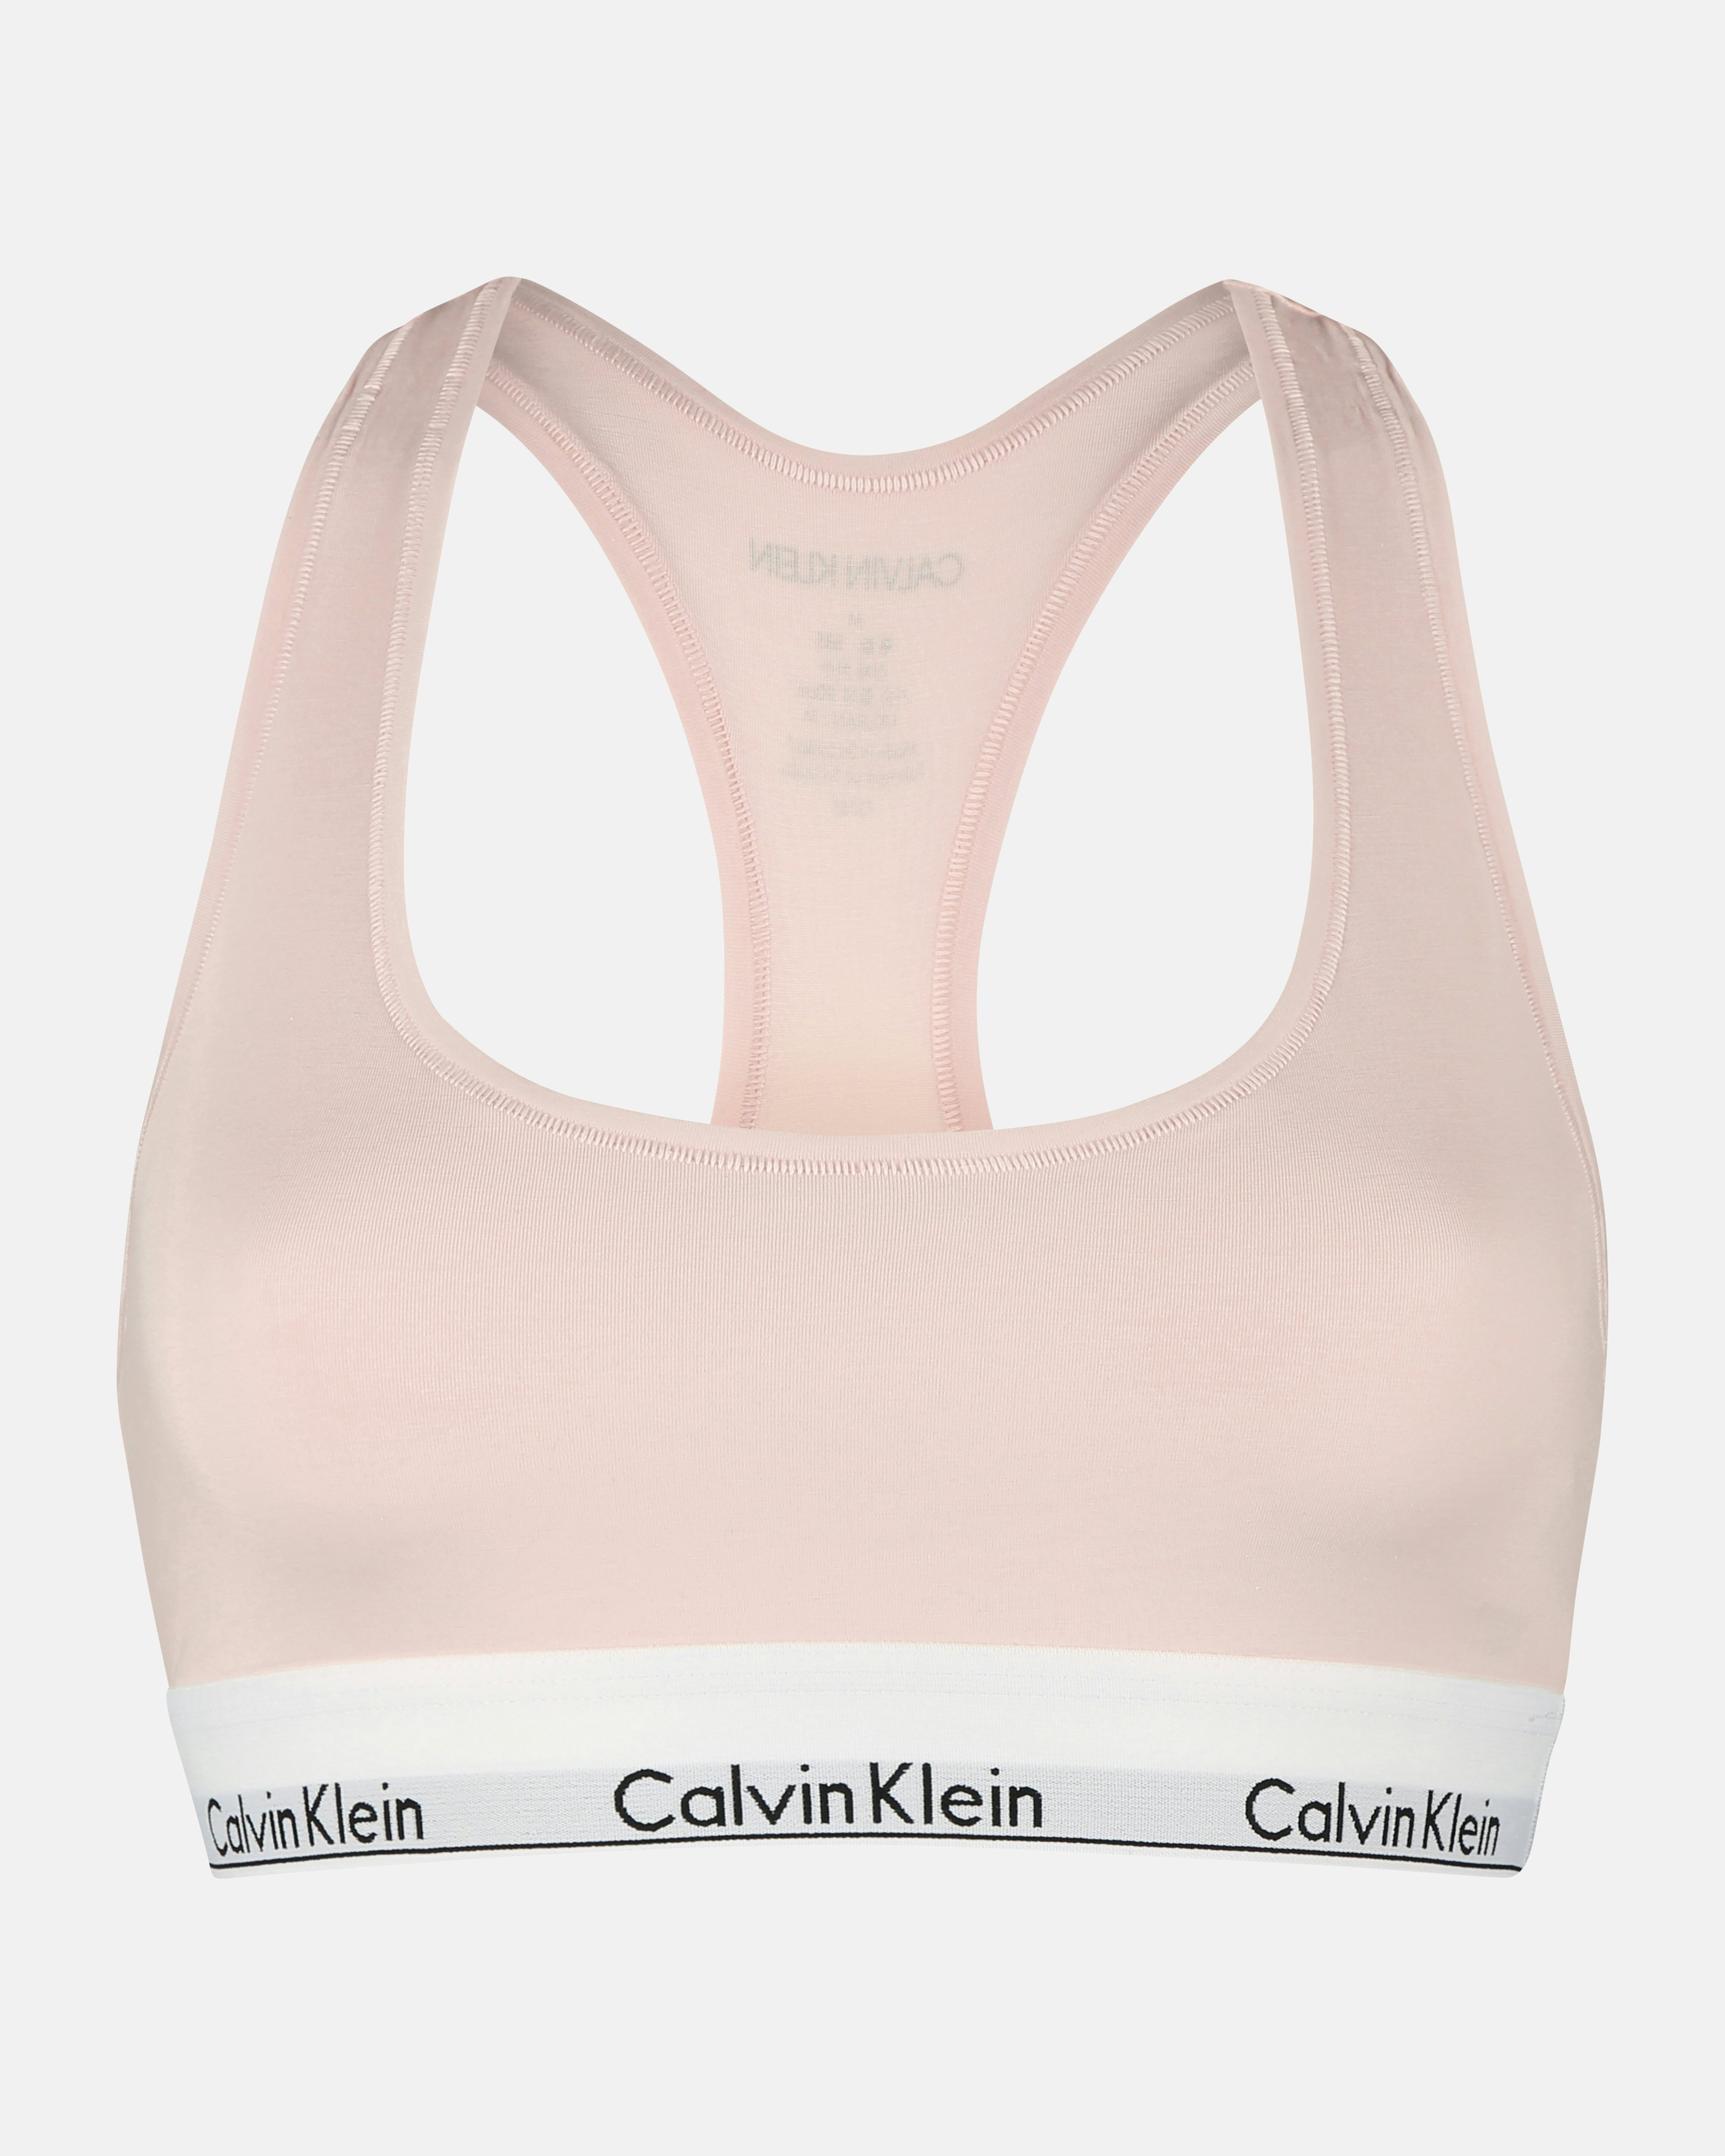 Calvin Klein Pf2t0531-kin-large Sports Bra in Pink